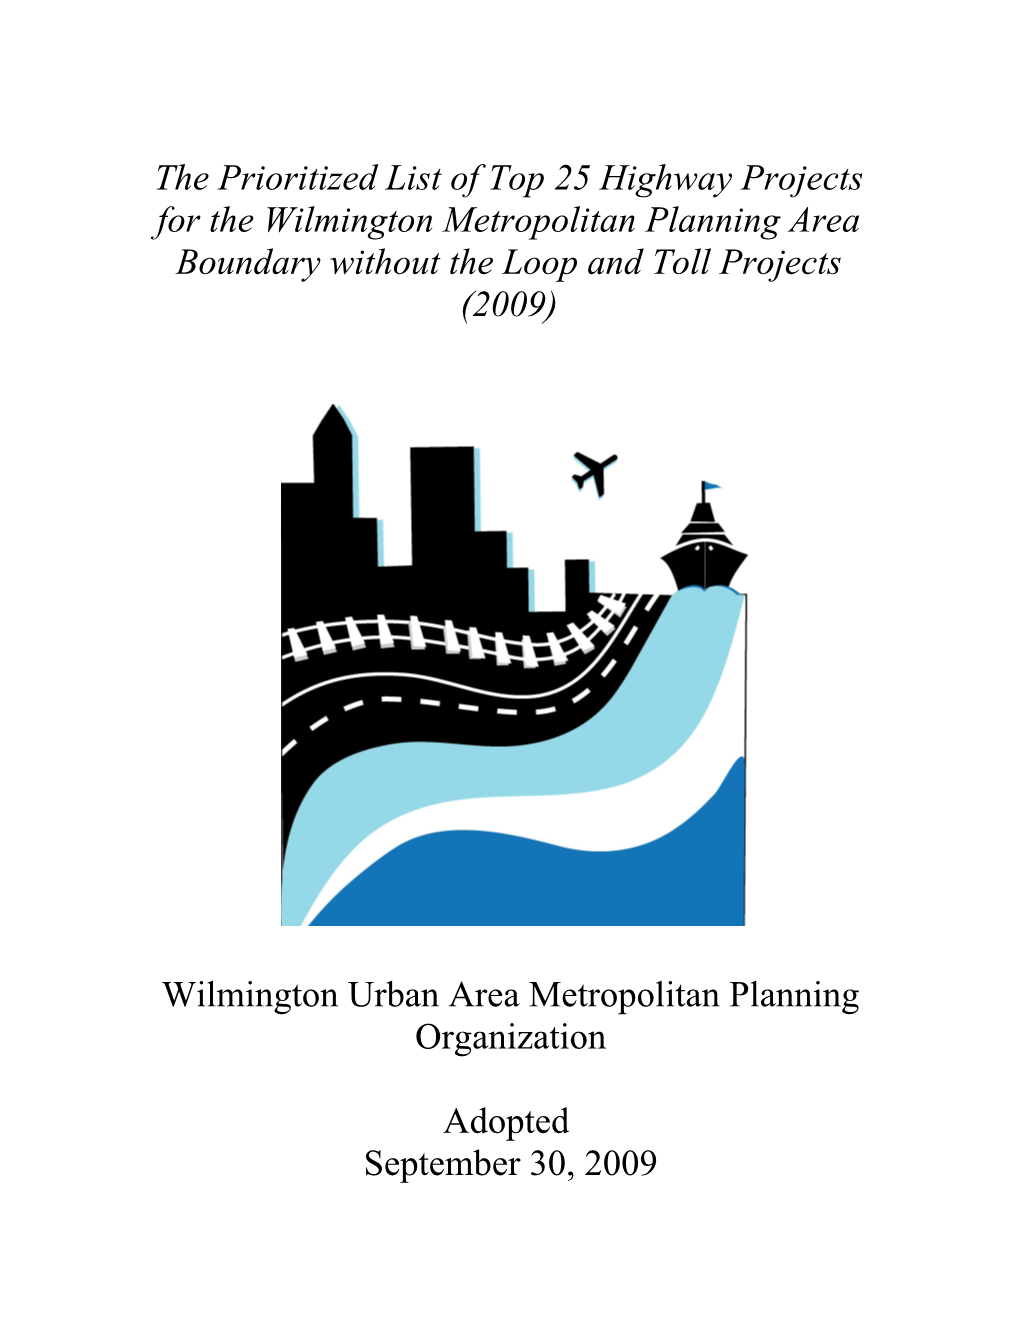 Wilmington Urban Area Metropolitan Planning Organization